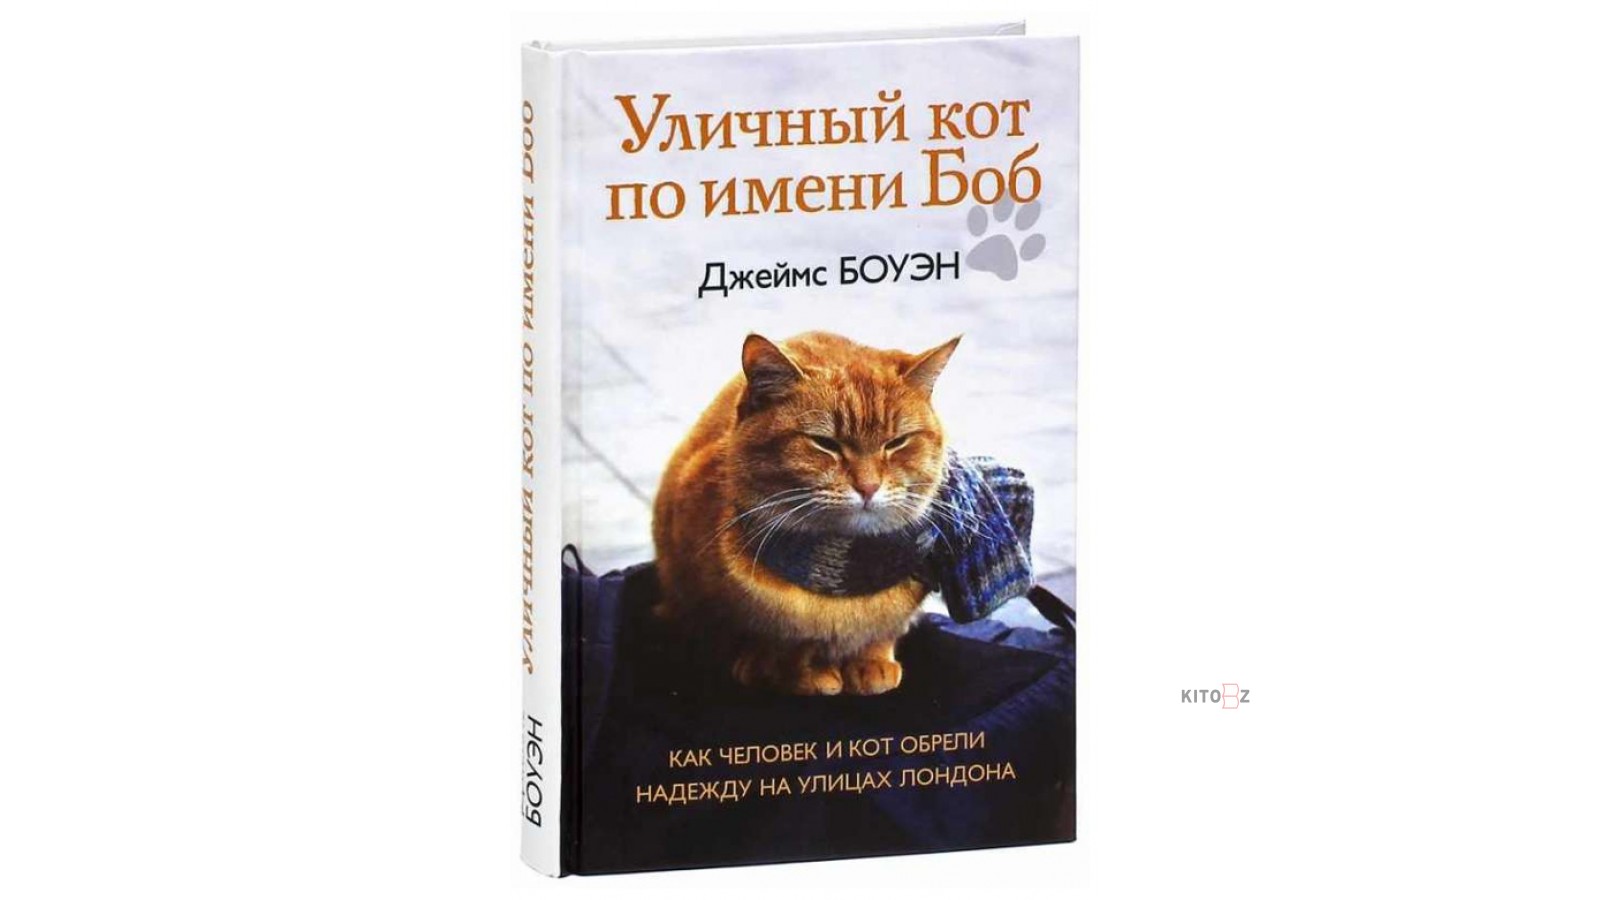 Книга про боба. Боуэн д. "кот по имени Боб". Кот по имени Боб книга. Уличный кот по имени Боб книга. Боуэн уличный кот по имени Боб книга.